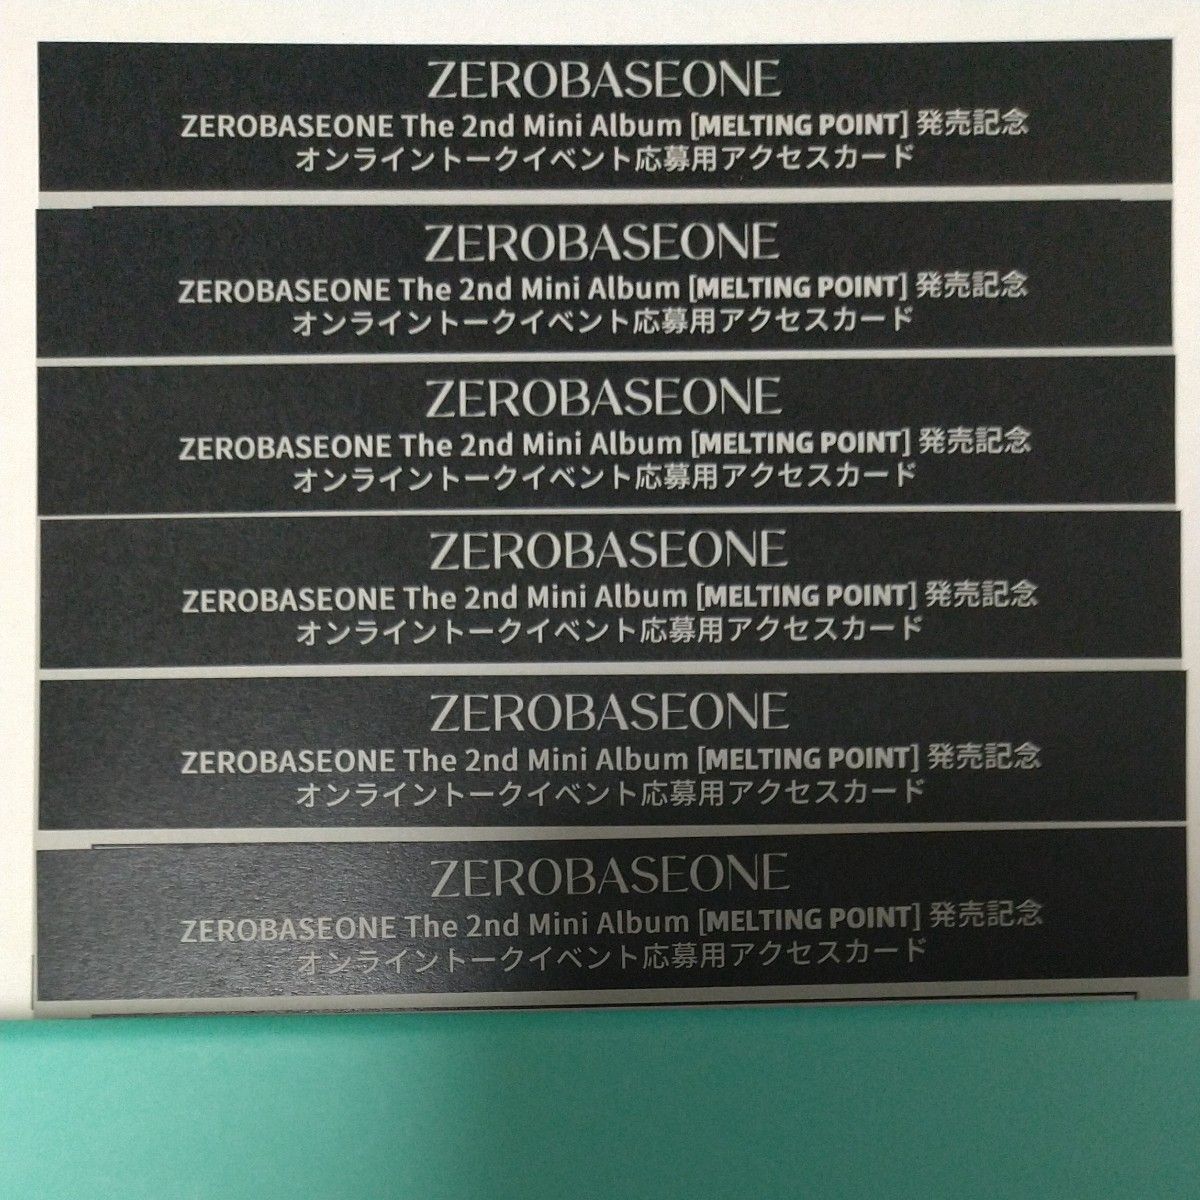 ZEROBASEONE The 2nd Mini Album MELTING POINT シリアルコード 10枚